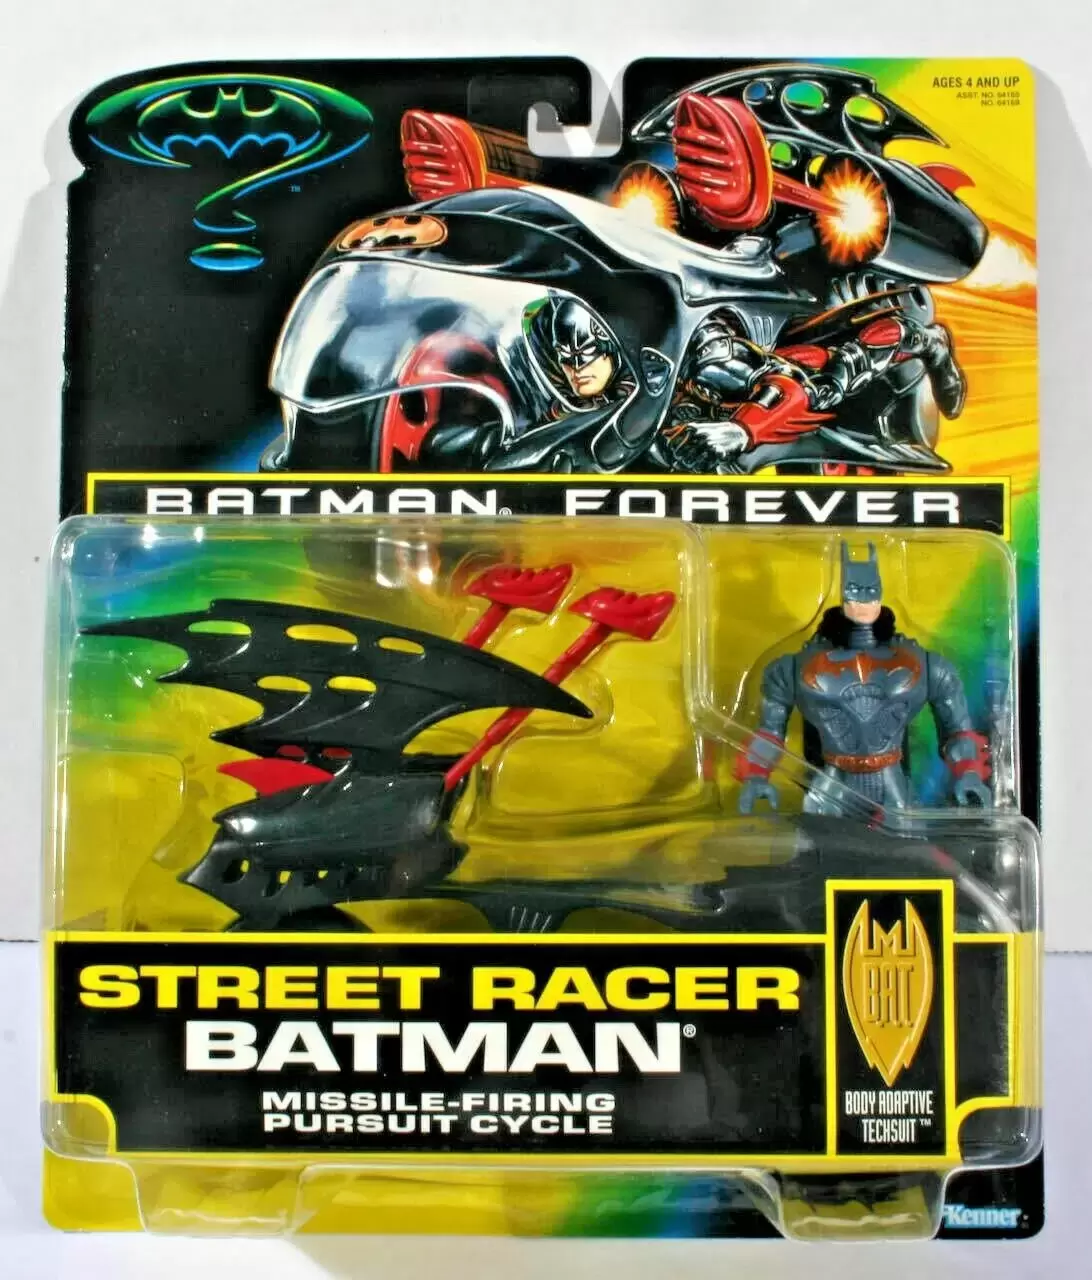 Batman Forever - Street Racer Batman